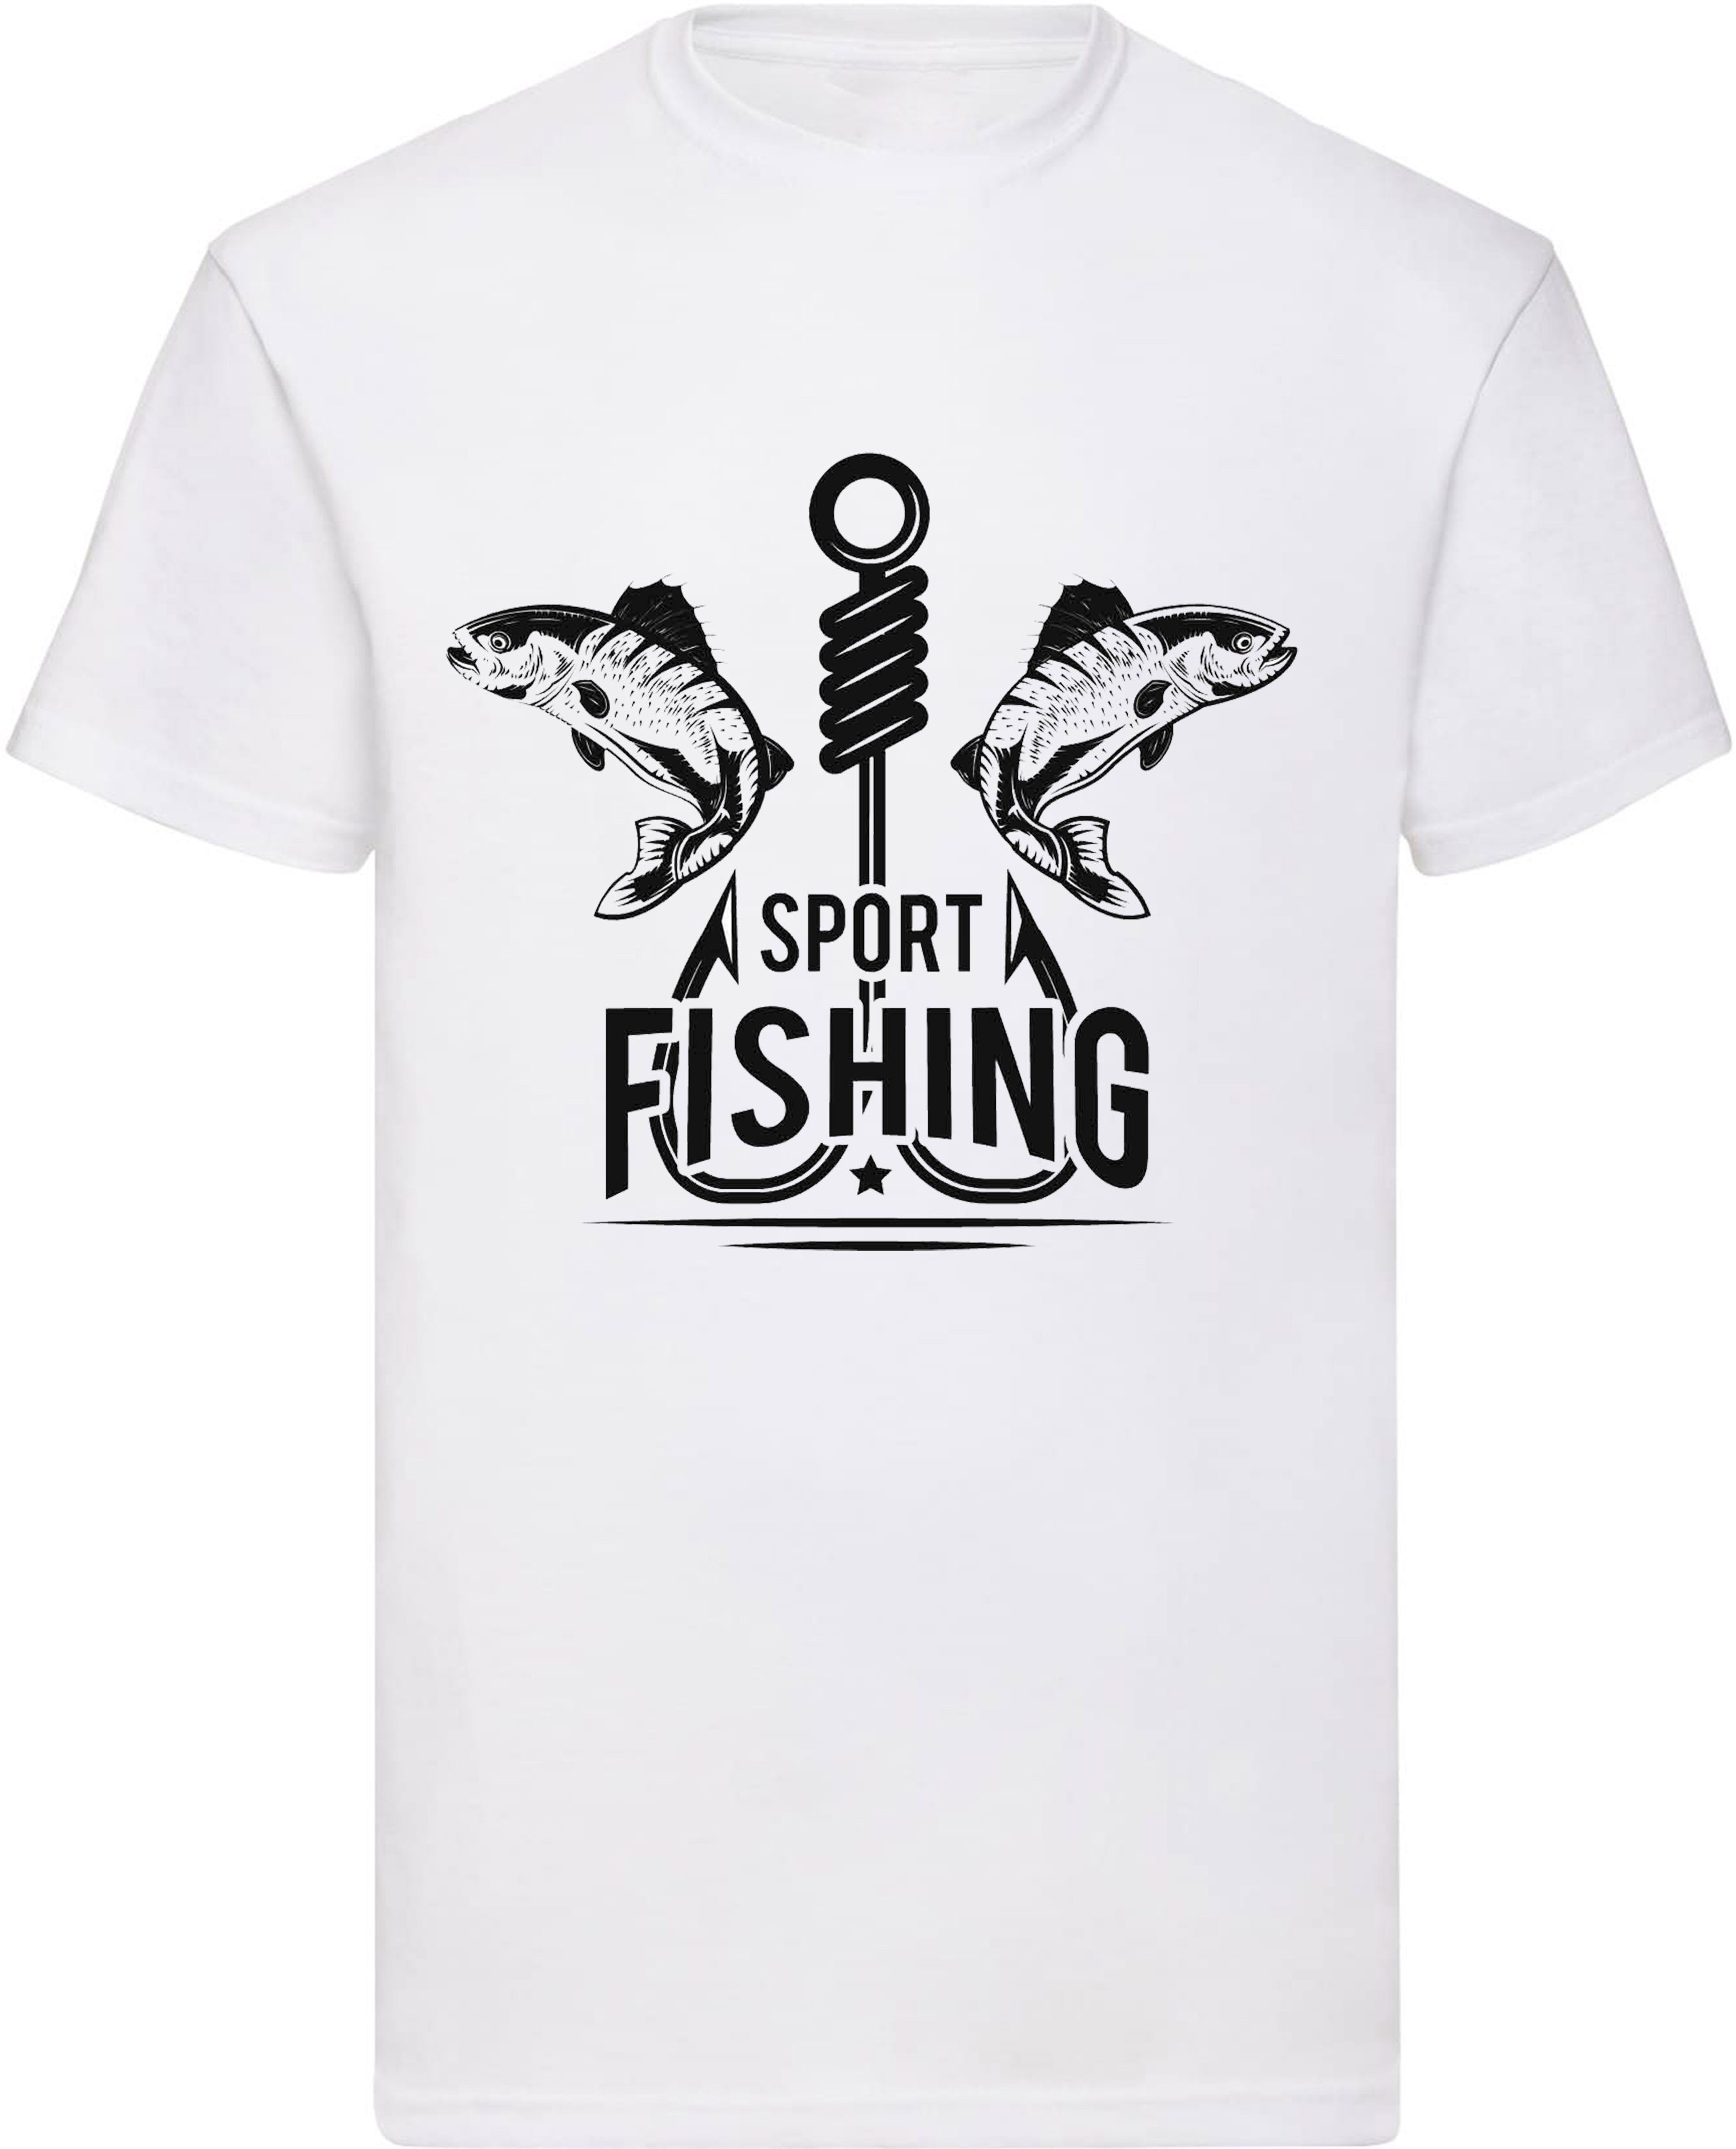 Banco T-Shirt Sport Fishing Angeln Sport Sommer Freizeit Outfit 100% Baumwolle